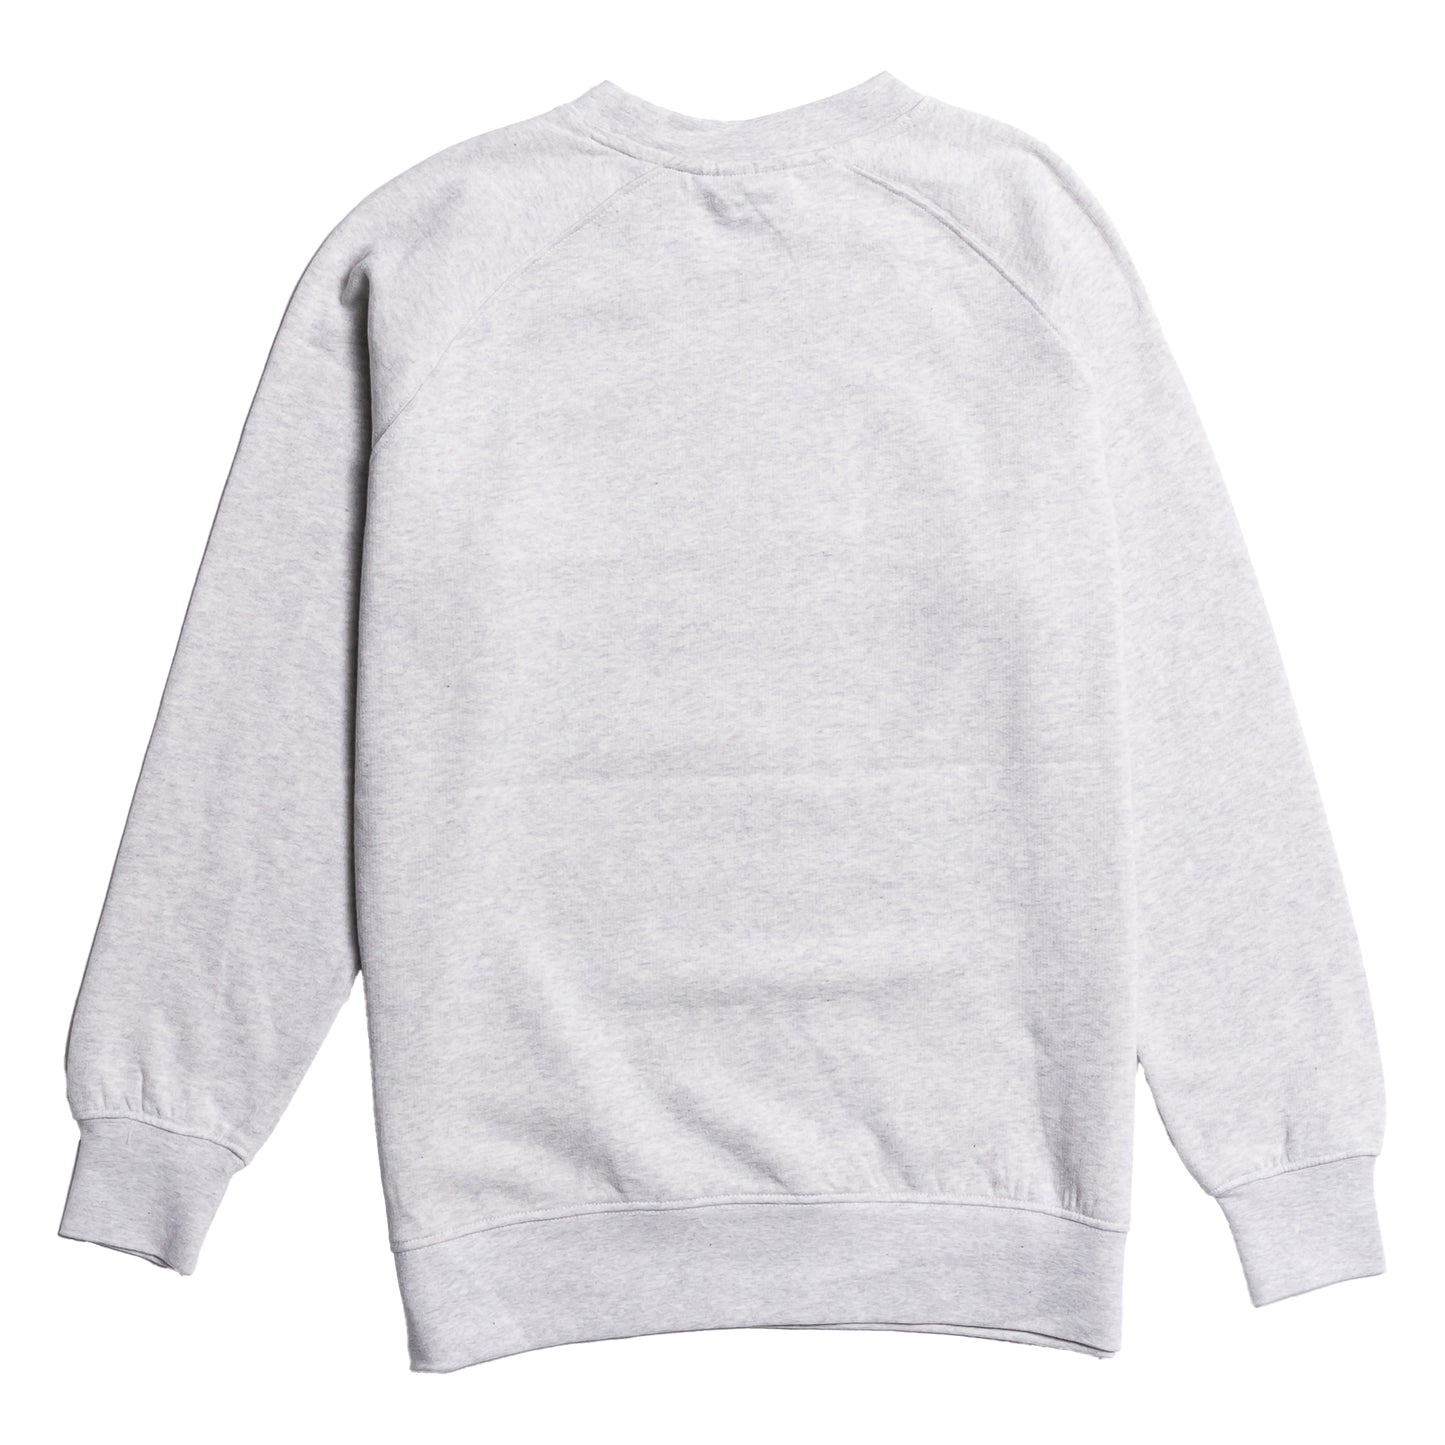 House Sigils - Shield Sweater